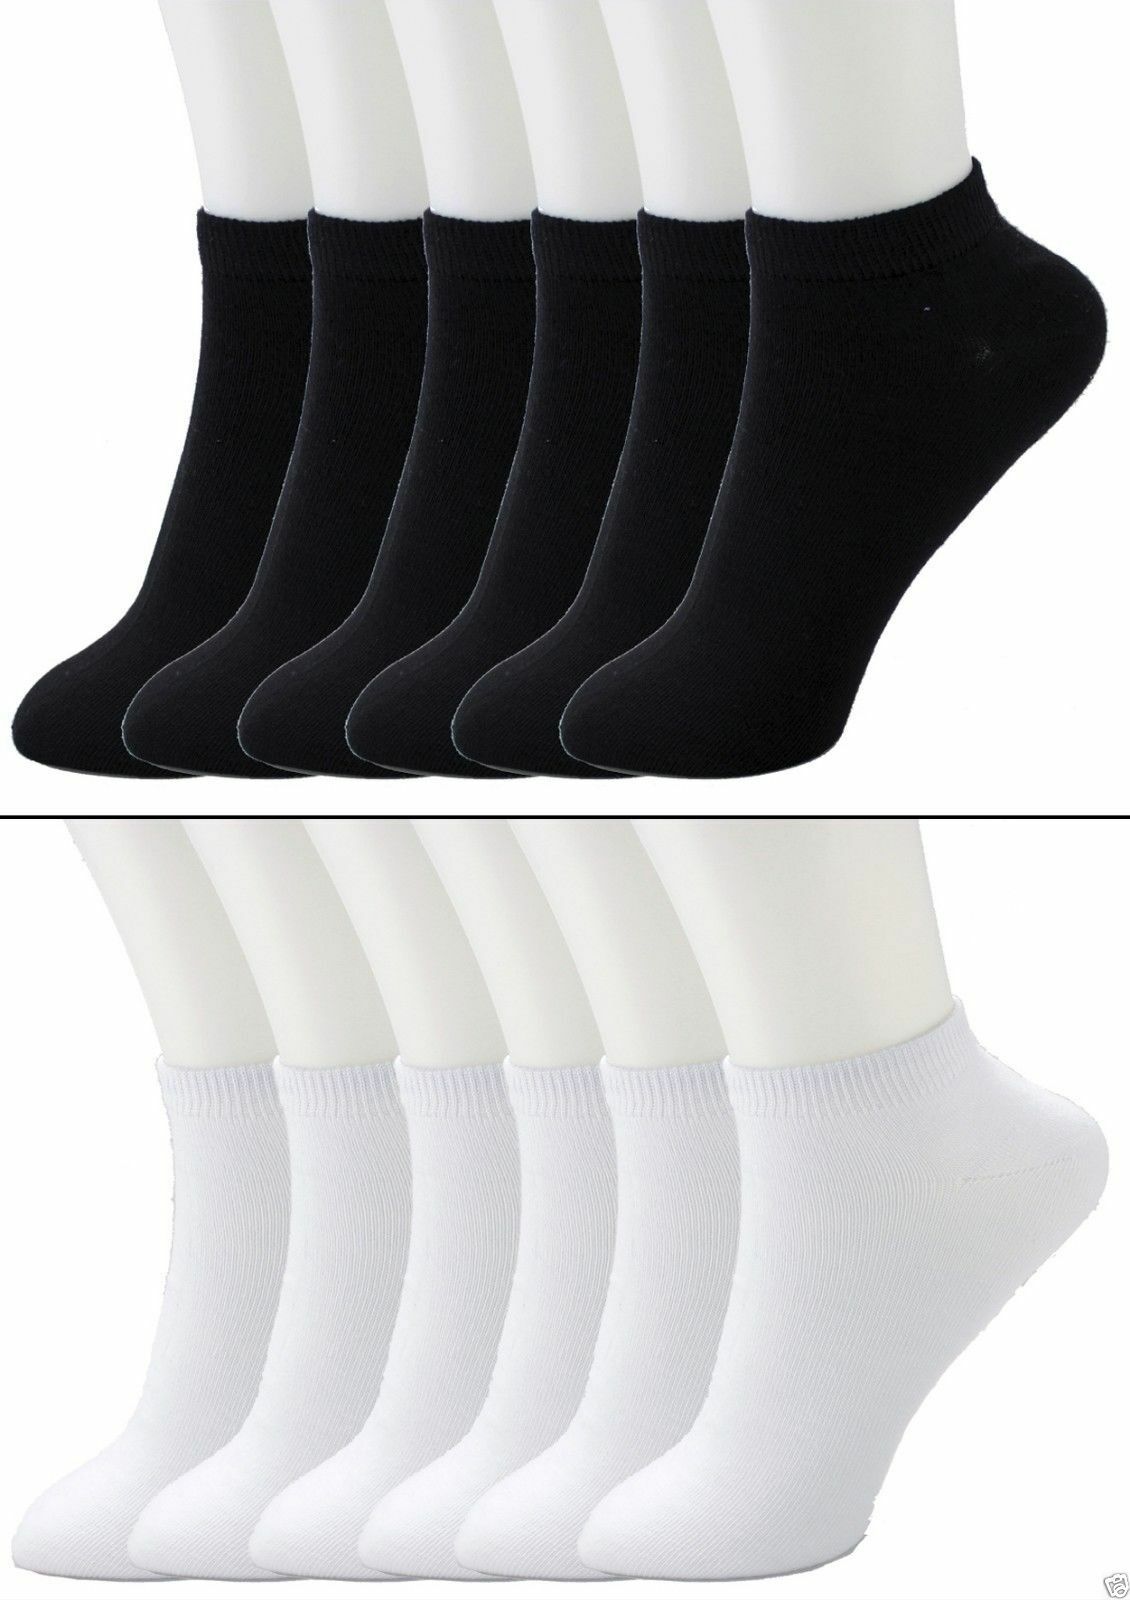 12 Packs Ankle Socks Sport Cool Mens Womens Size 9-11 Low Cut Dozen #70033a